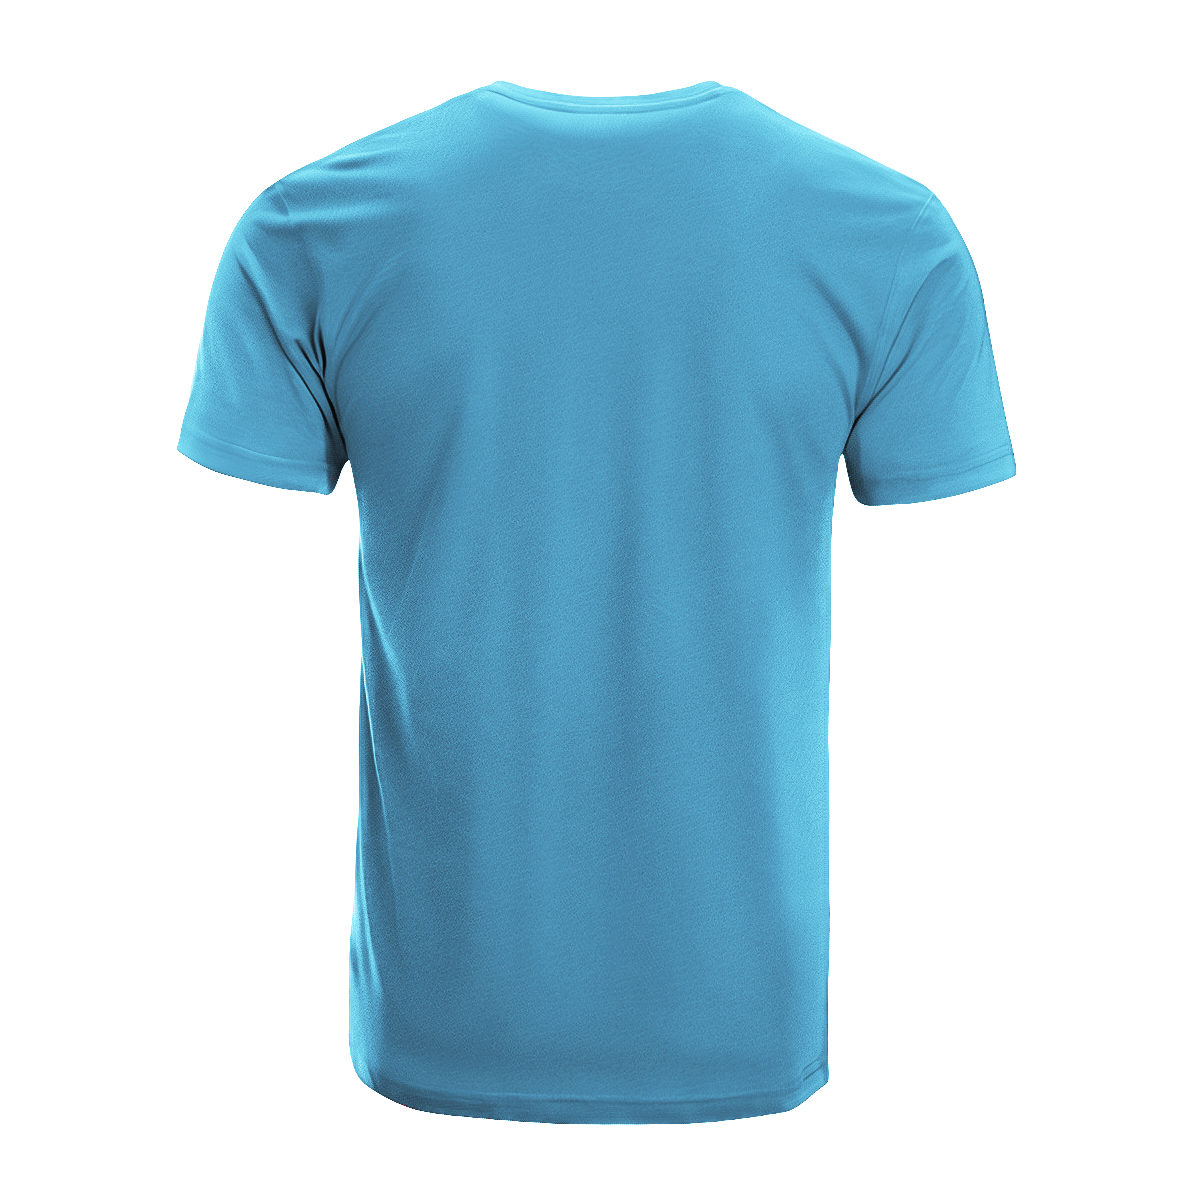 Wishart Tartan Crest T-shirt - I'm not yelling style